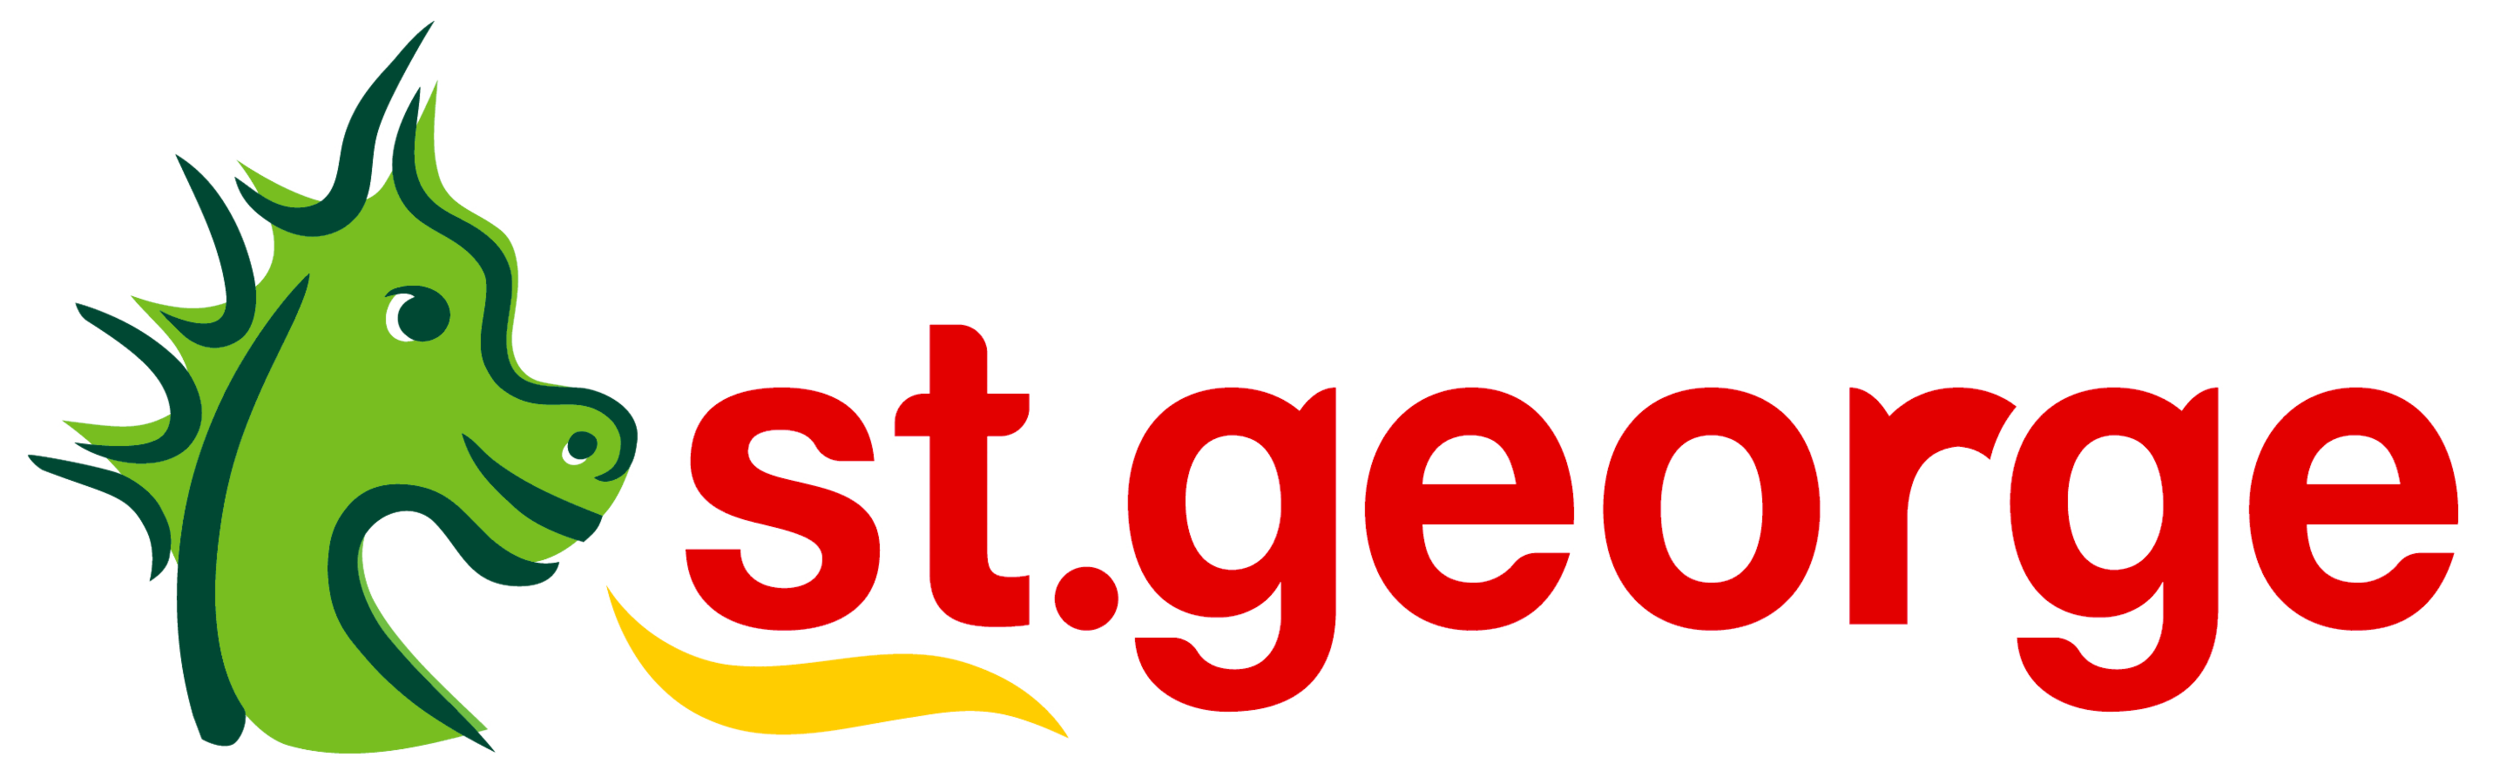 3.St_George_Bank_logo.png